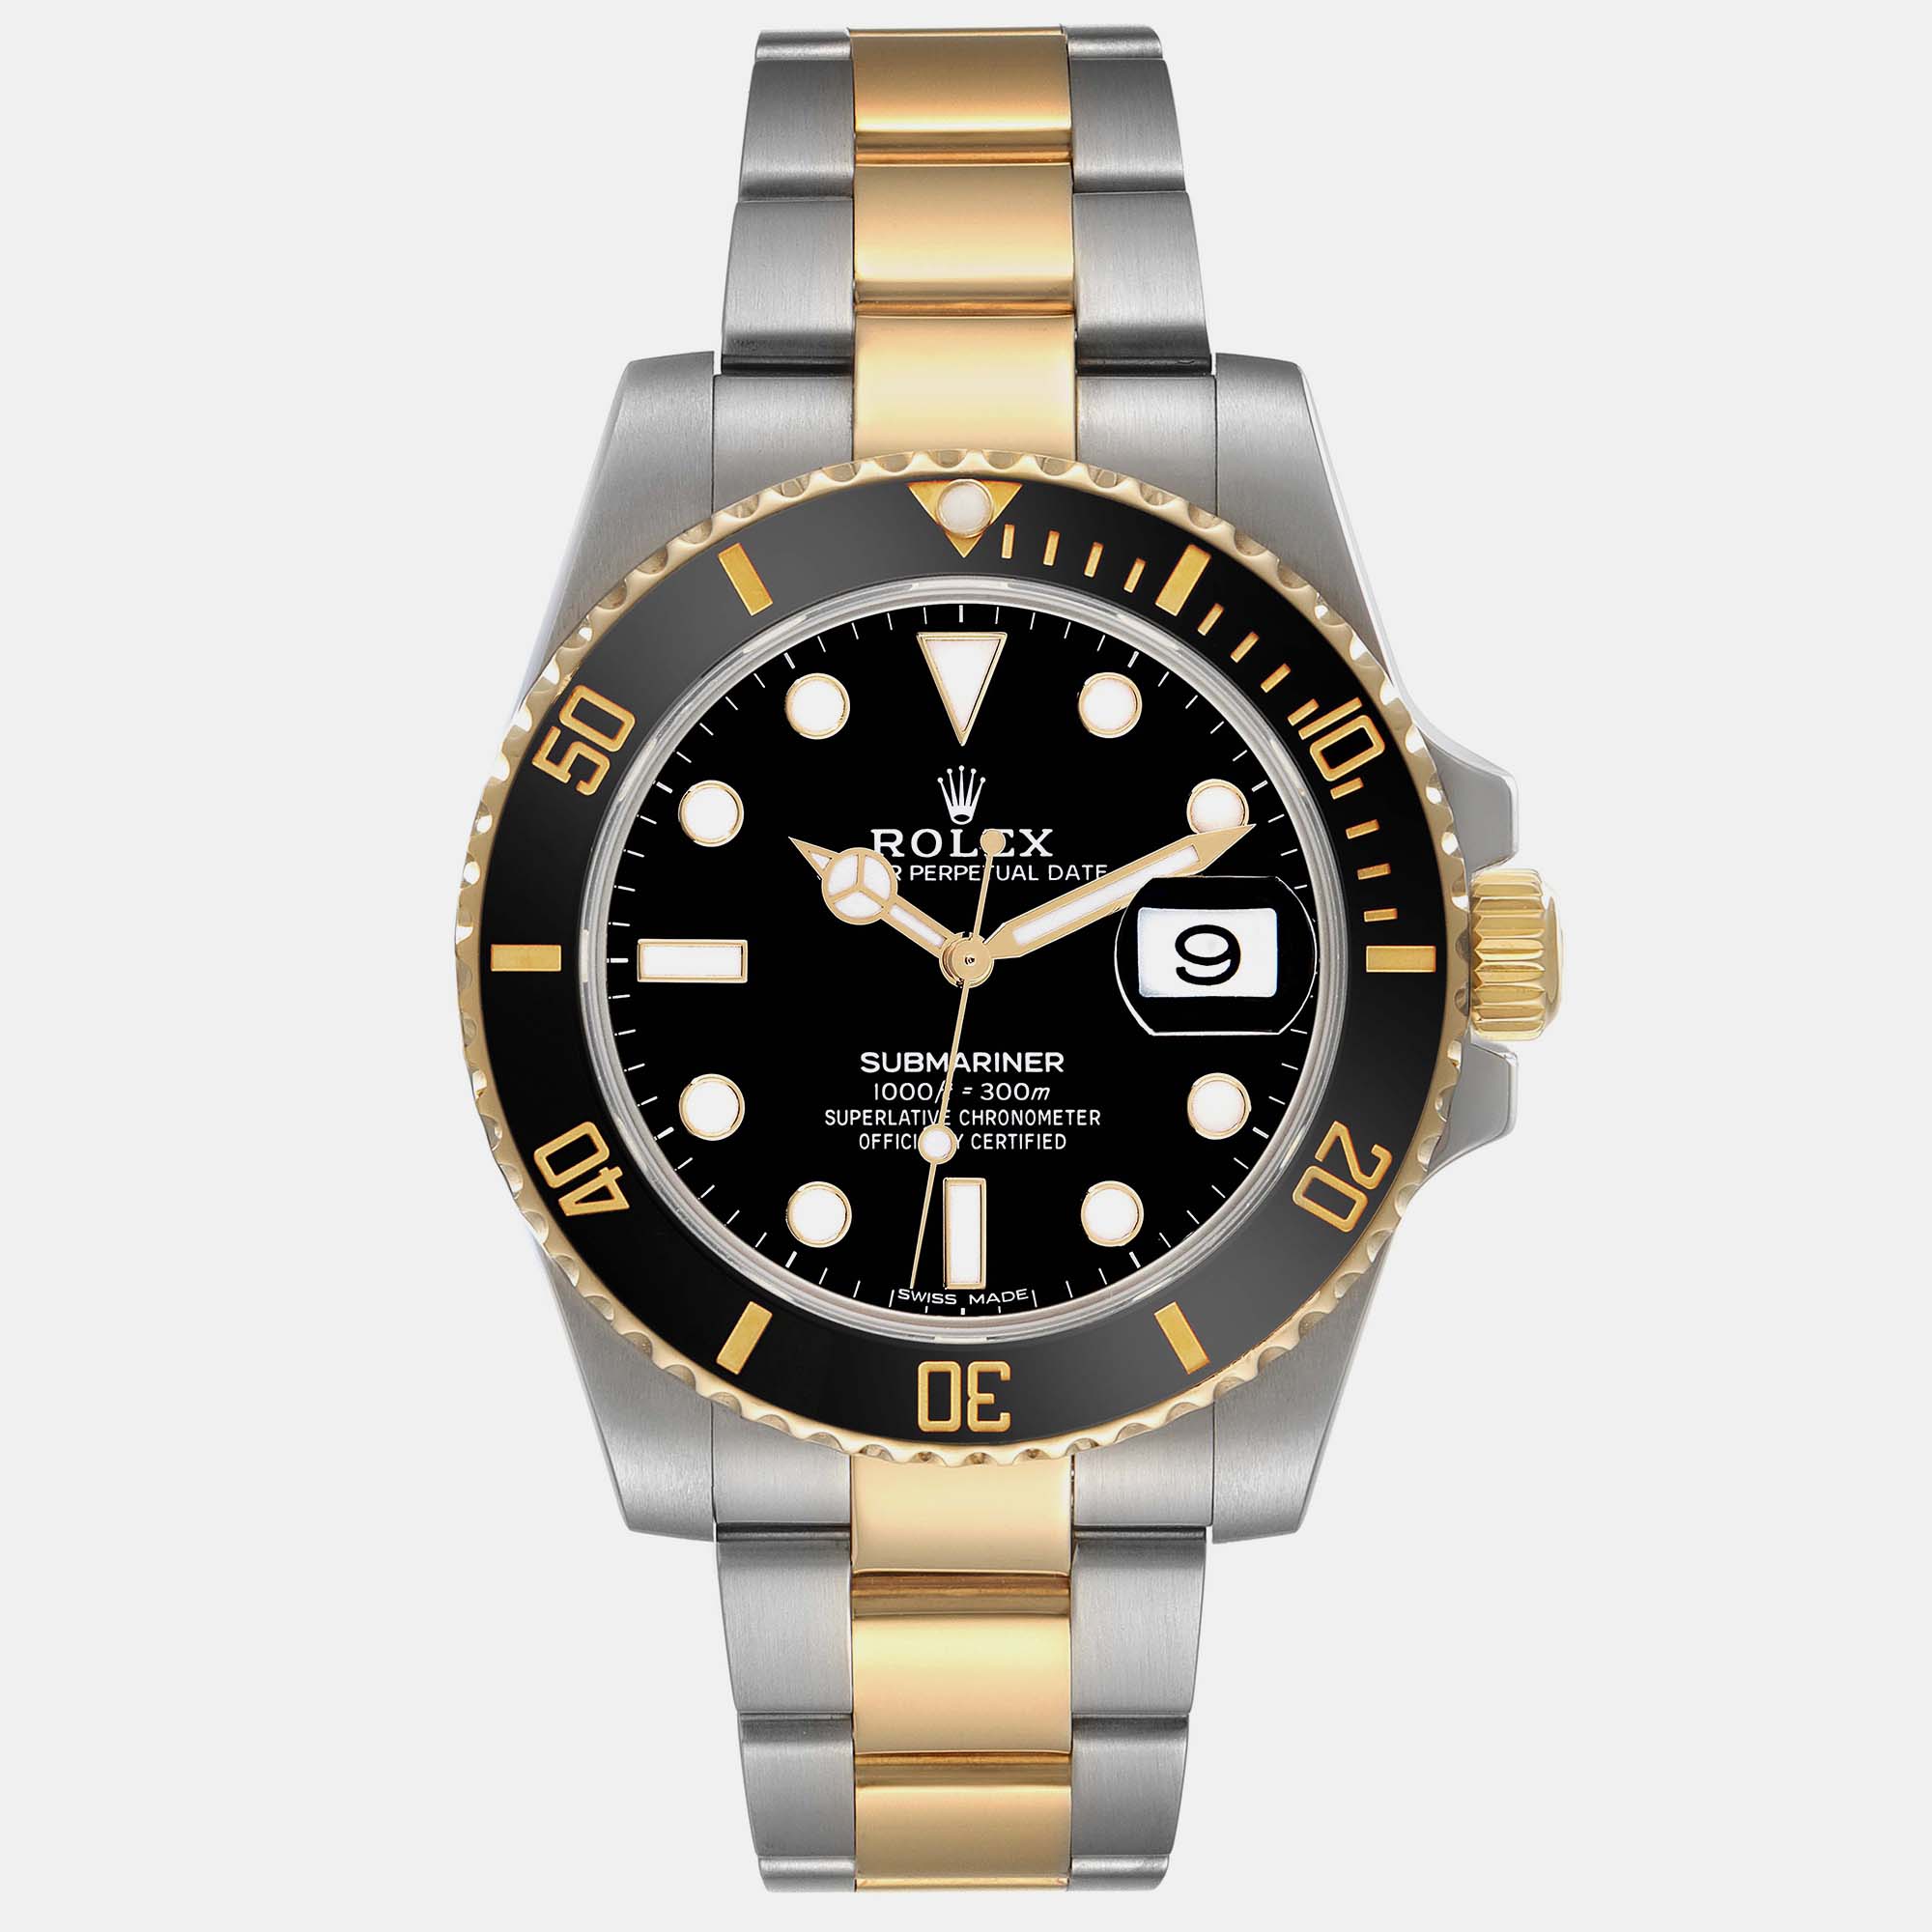 Rolex submariner steel yellow gold black dial men's watch 116613 40 mm